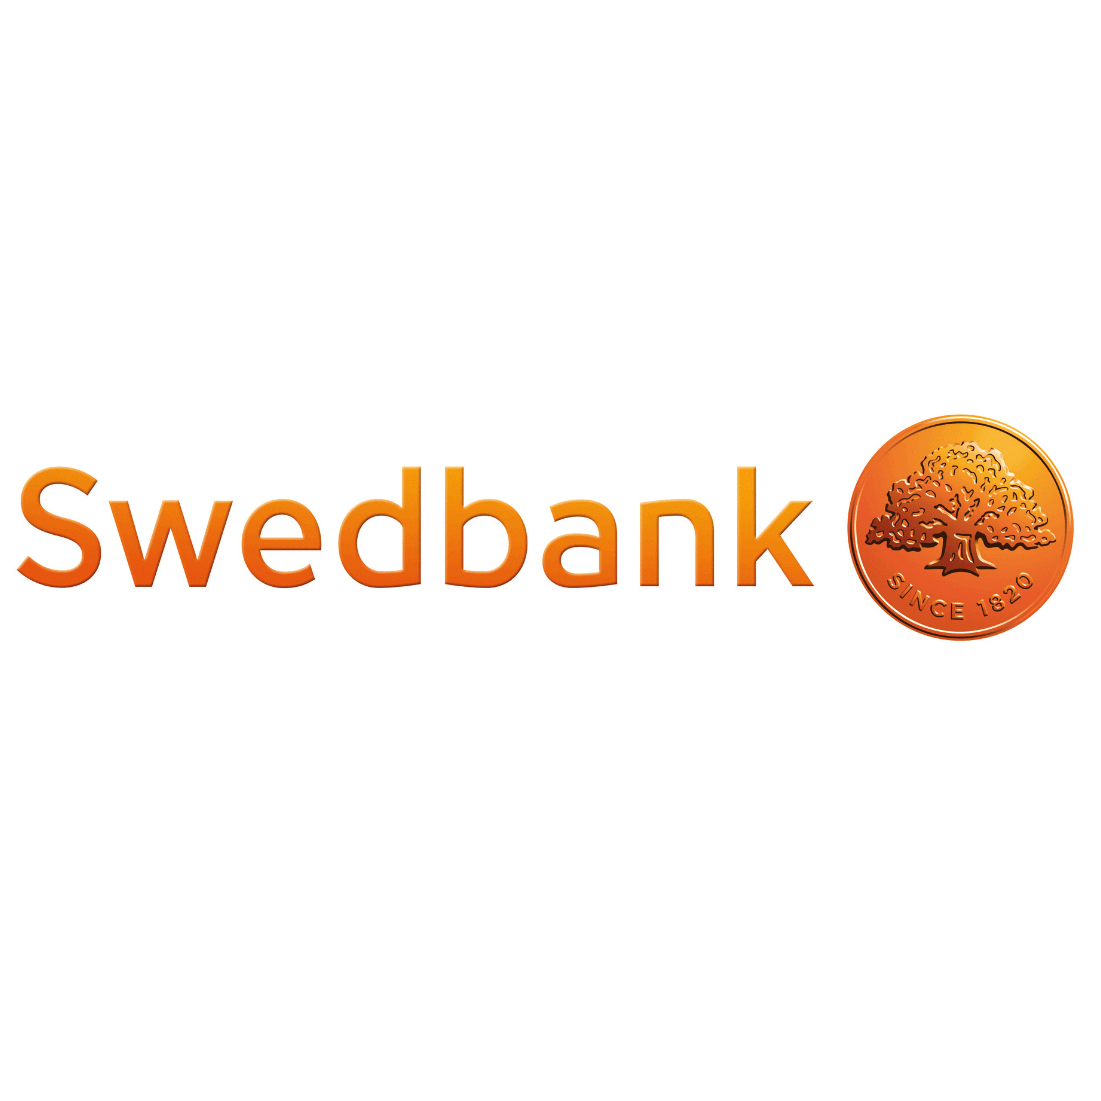 Swedbank-Logo-1200x837-2.jpeg